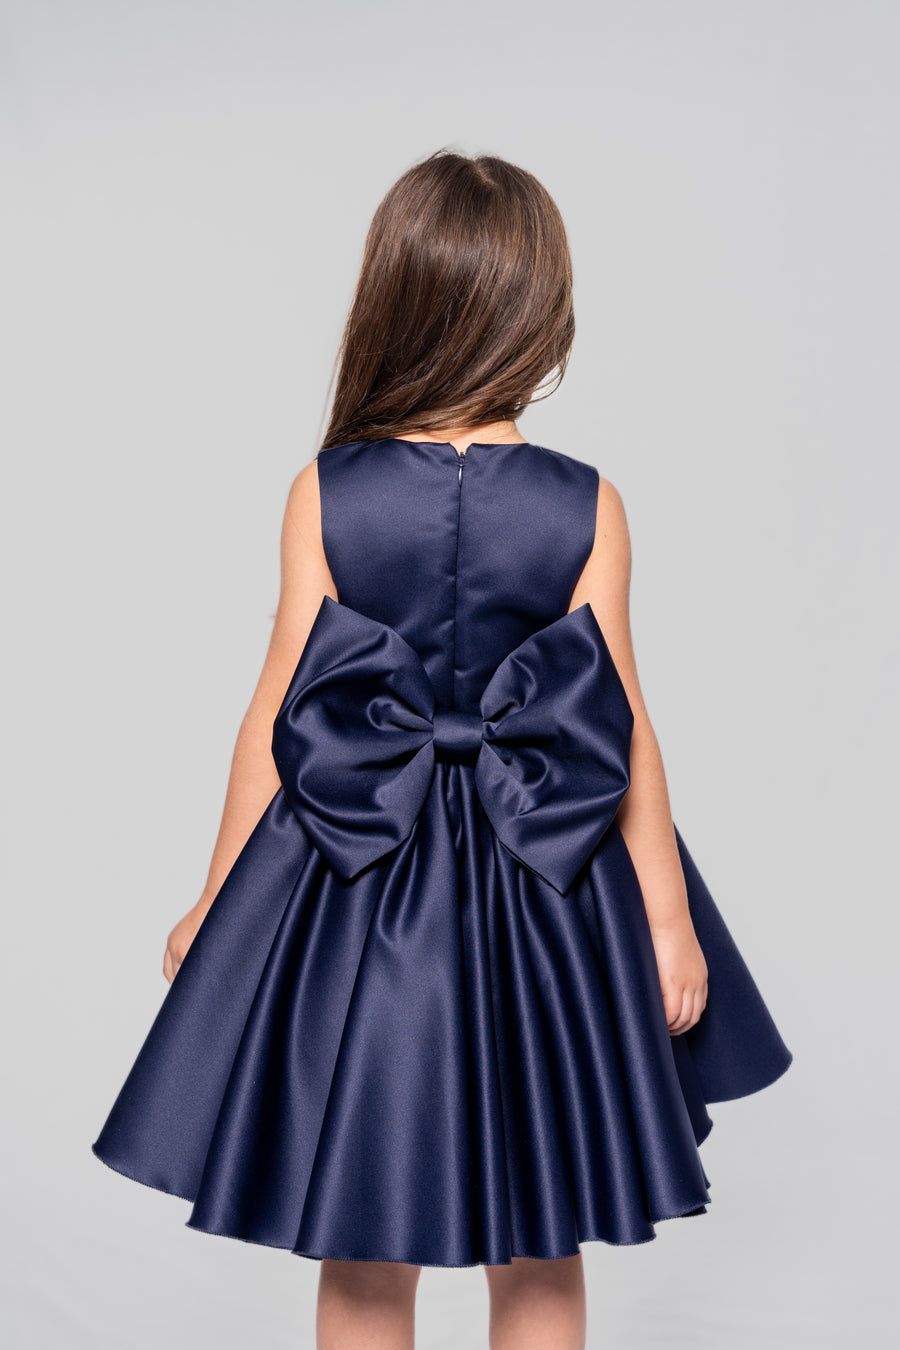 Dark blue satin dress with a ribbon